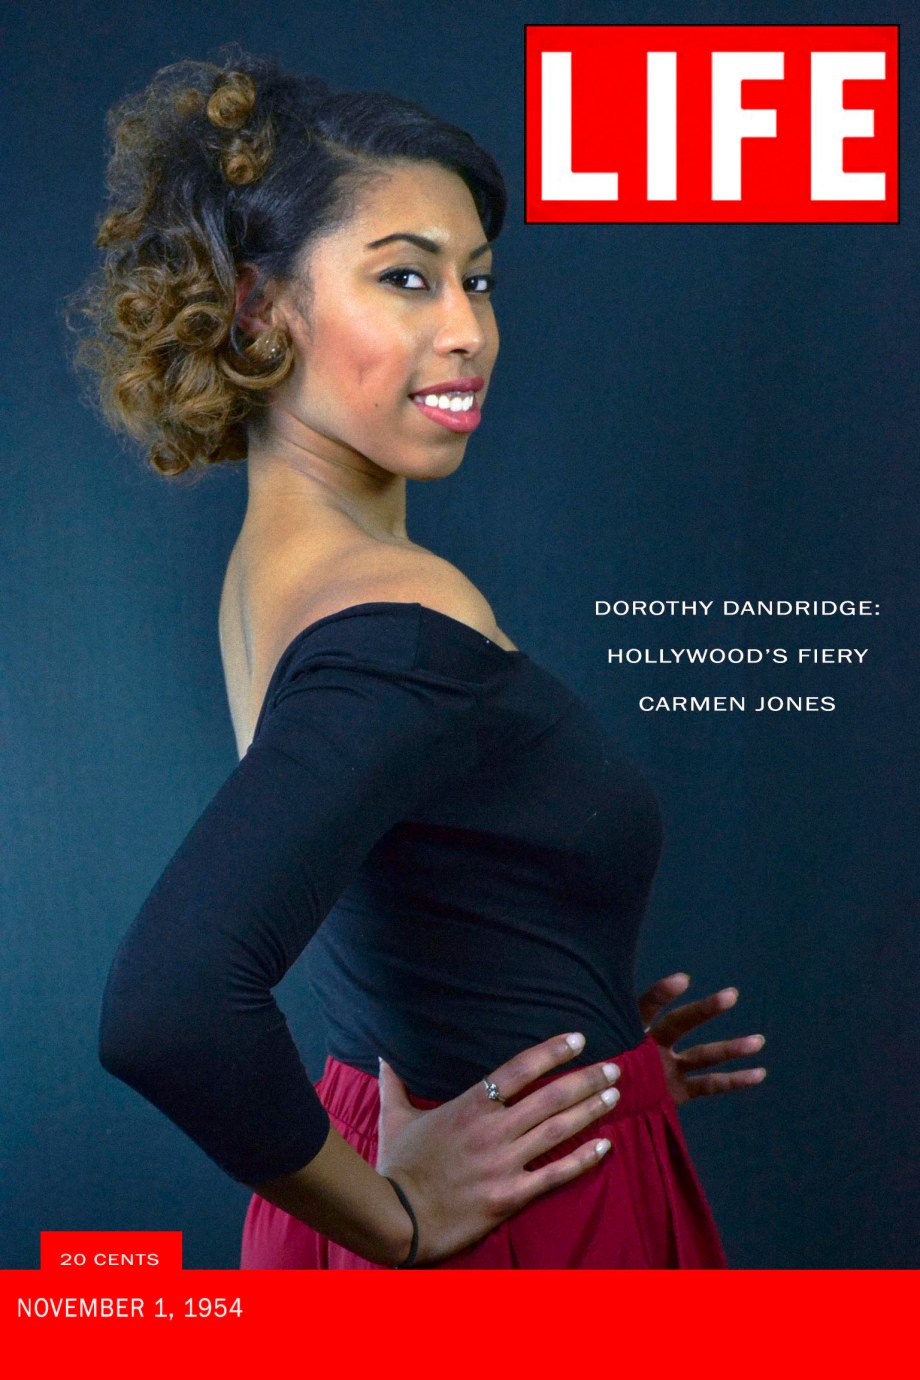 Black Woman As Dorothy Actress/Singer Dandridge